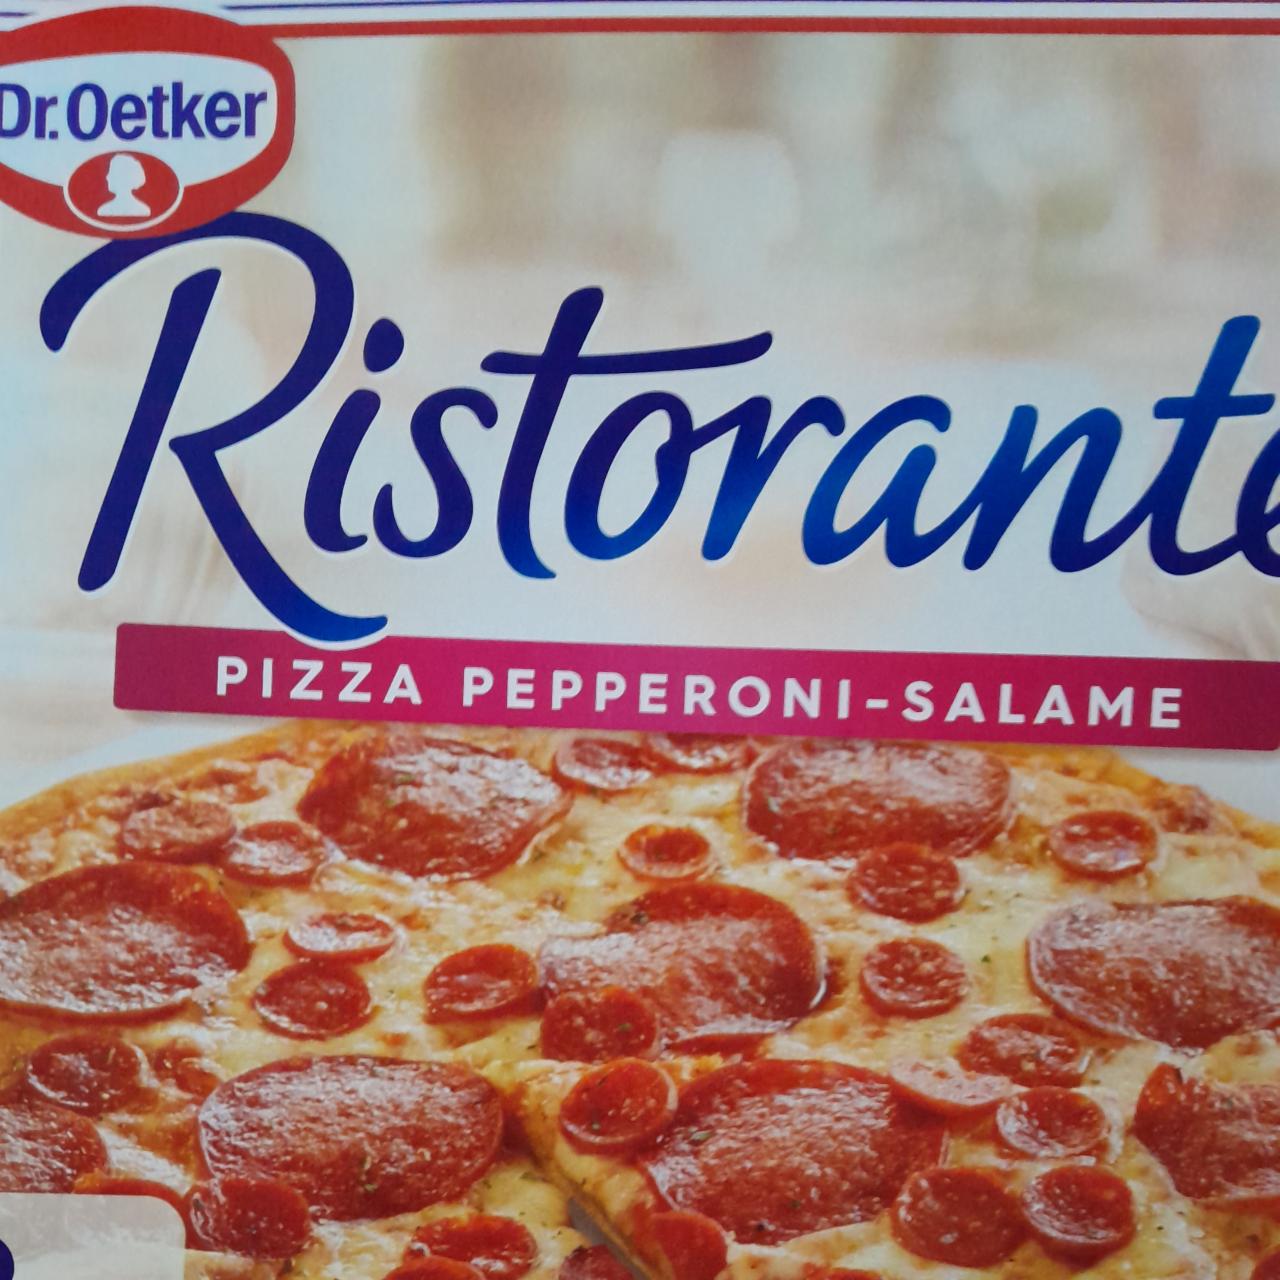 Фото - Ristirante pizza pepperoni-salame Dr. Oetker